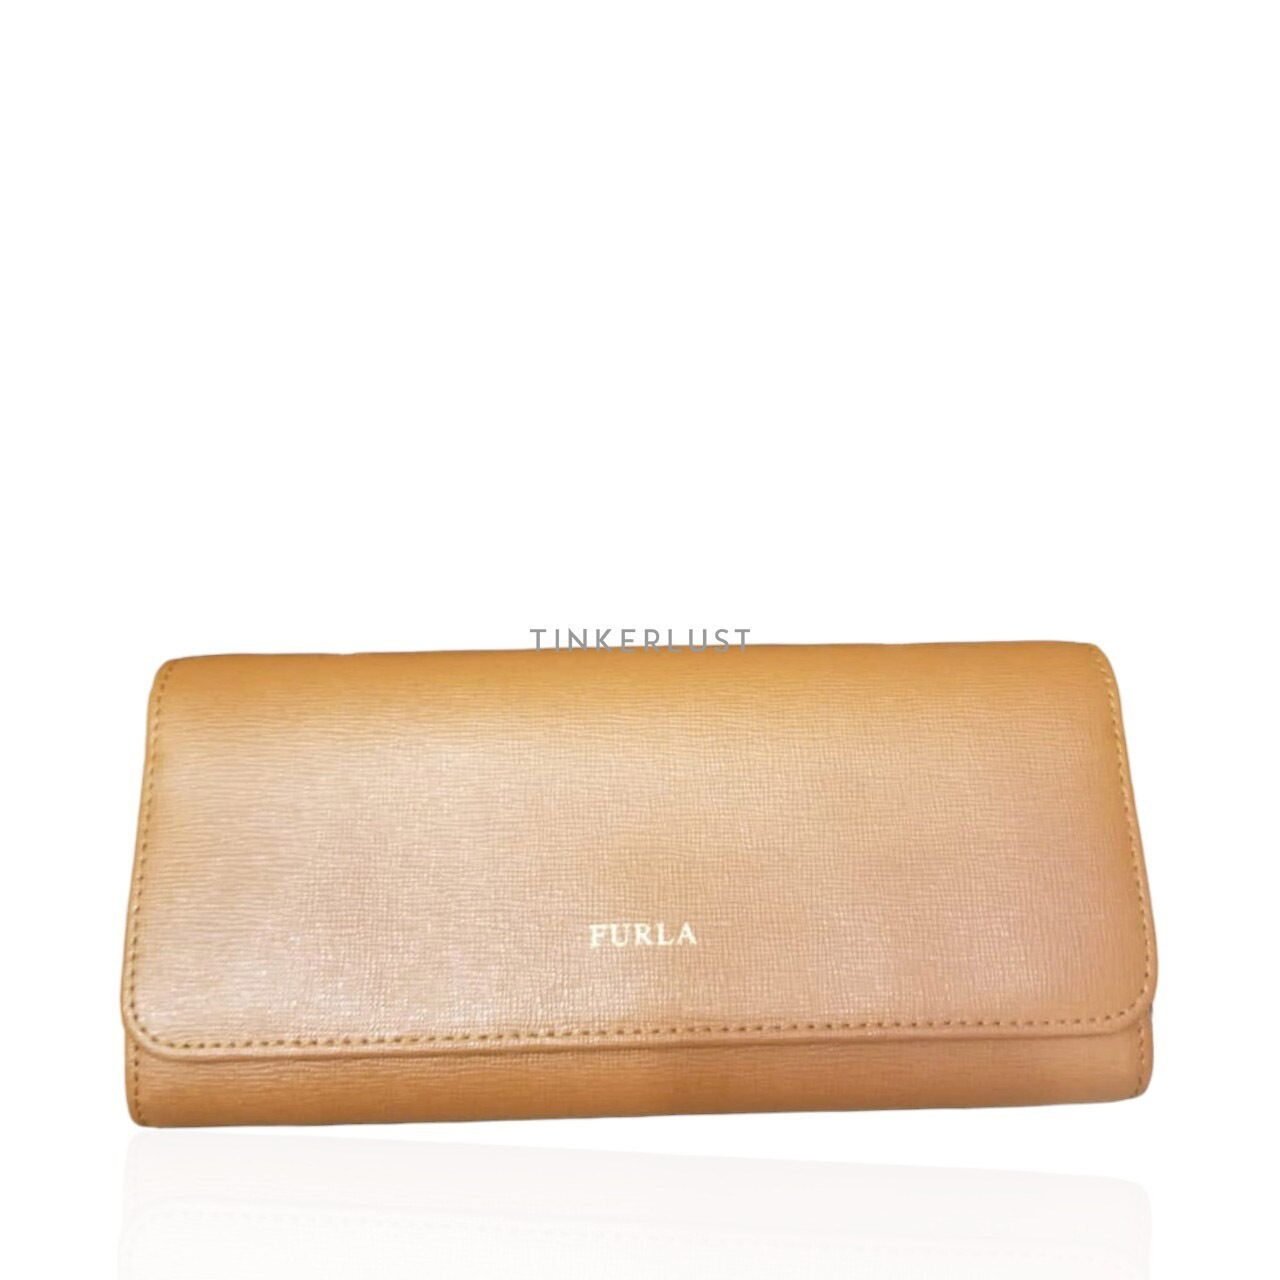 Furla Bifold Continental Tan Leather Wallet